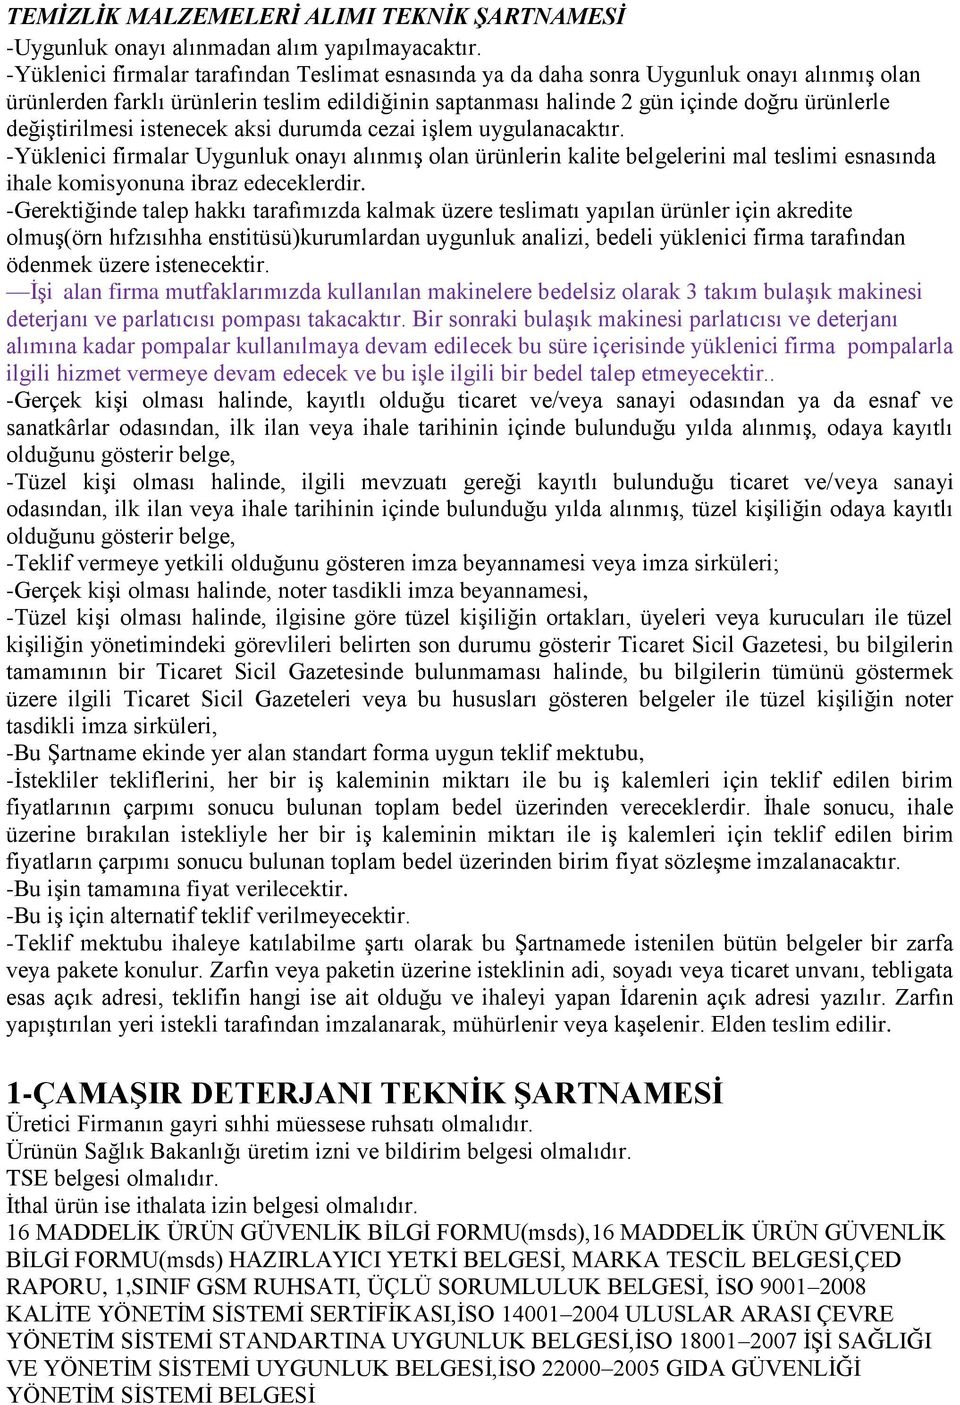 TEMİZLİK MALZEMELERİ ALIMI TEKNİK ŞARTNAMESİ - PDF Free Download